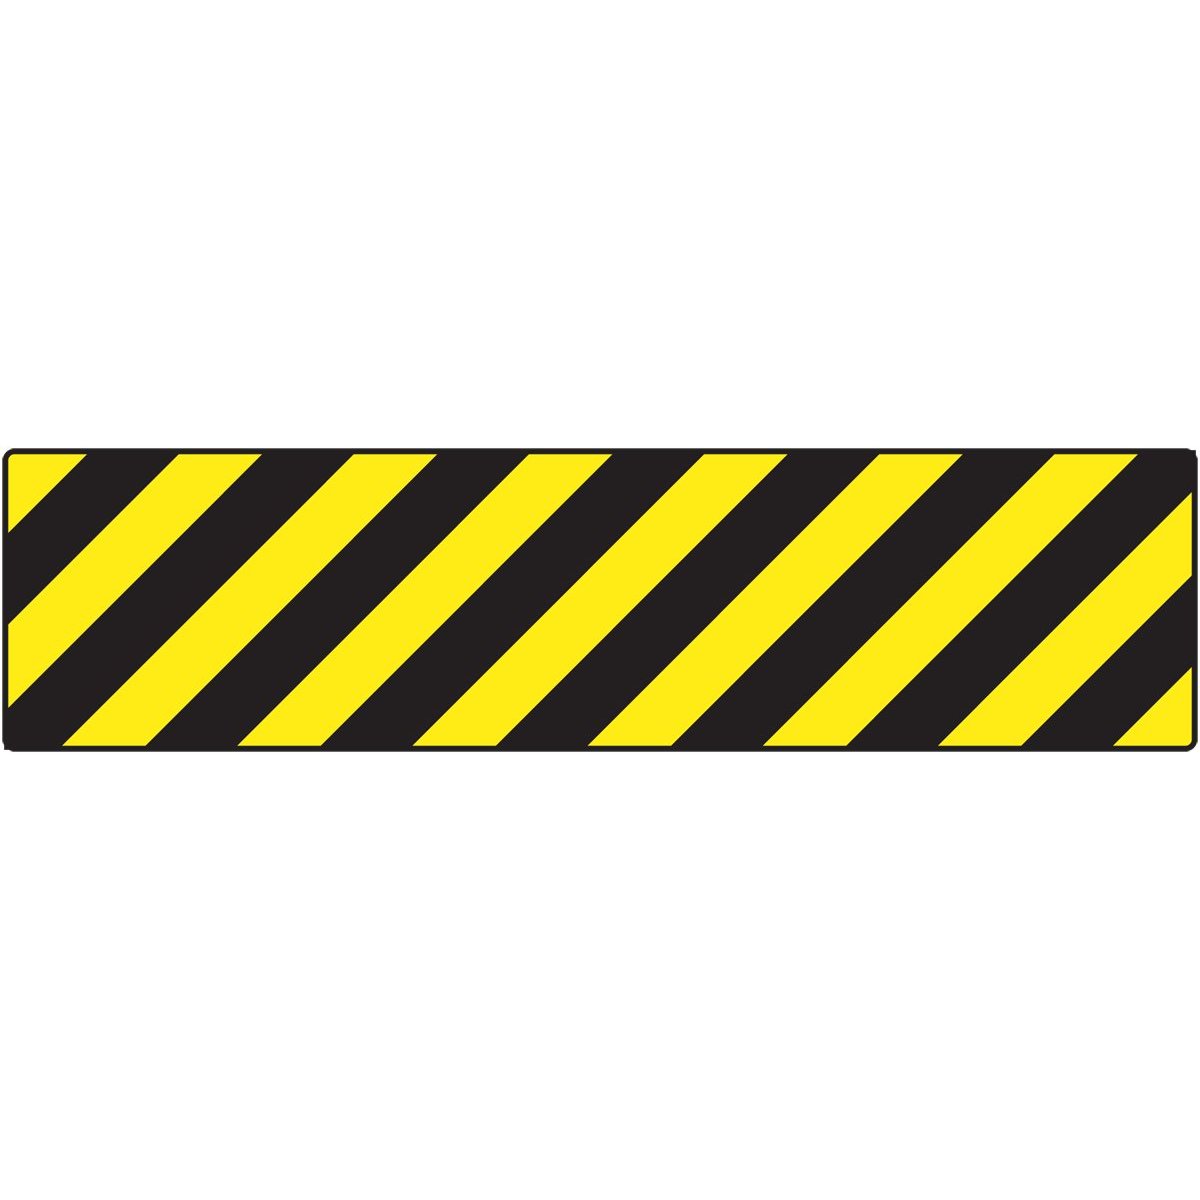 Caution Tape Border 